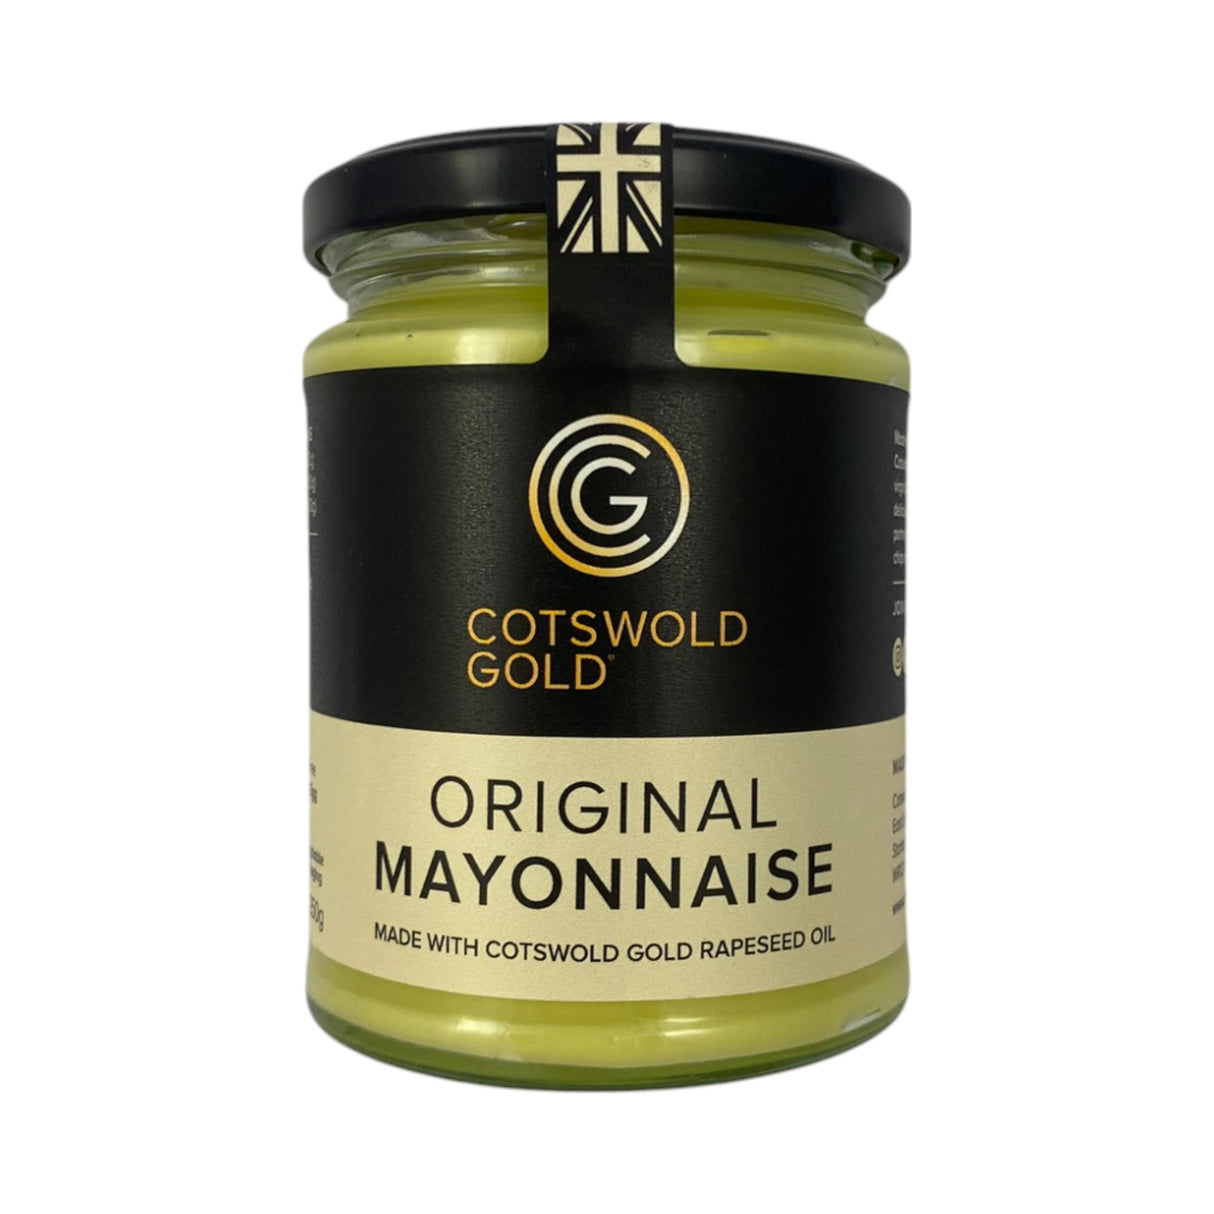 Cotswold Gold - Original Mayonnaise 248g